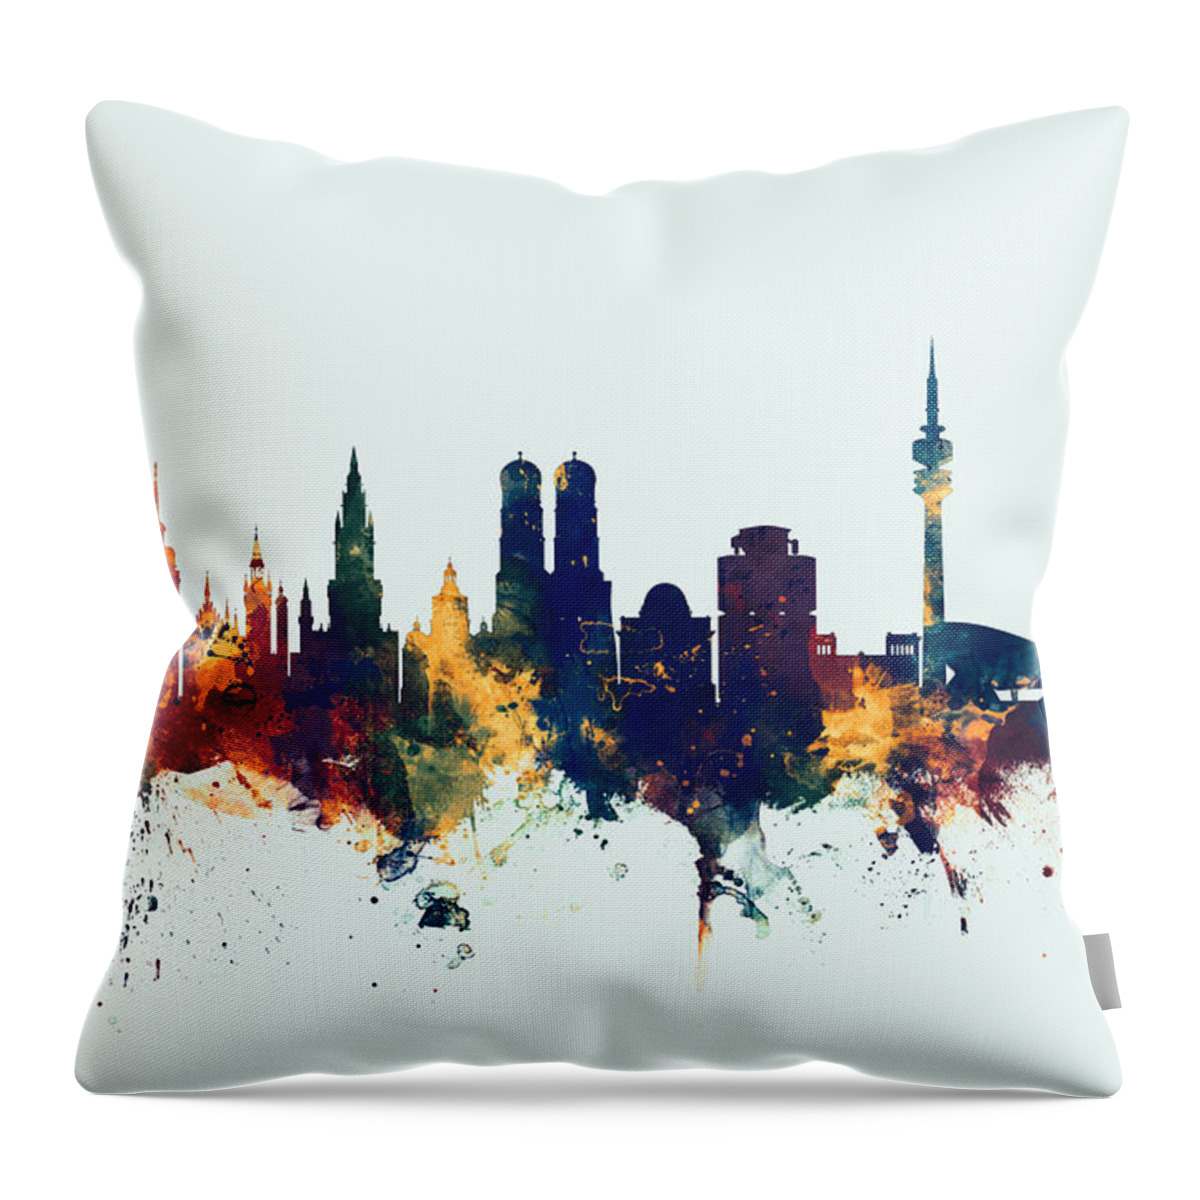 City Skyline Throw Pillow featuring the digital art Munich Germany Skyline by Michael Tompsett